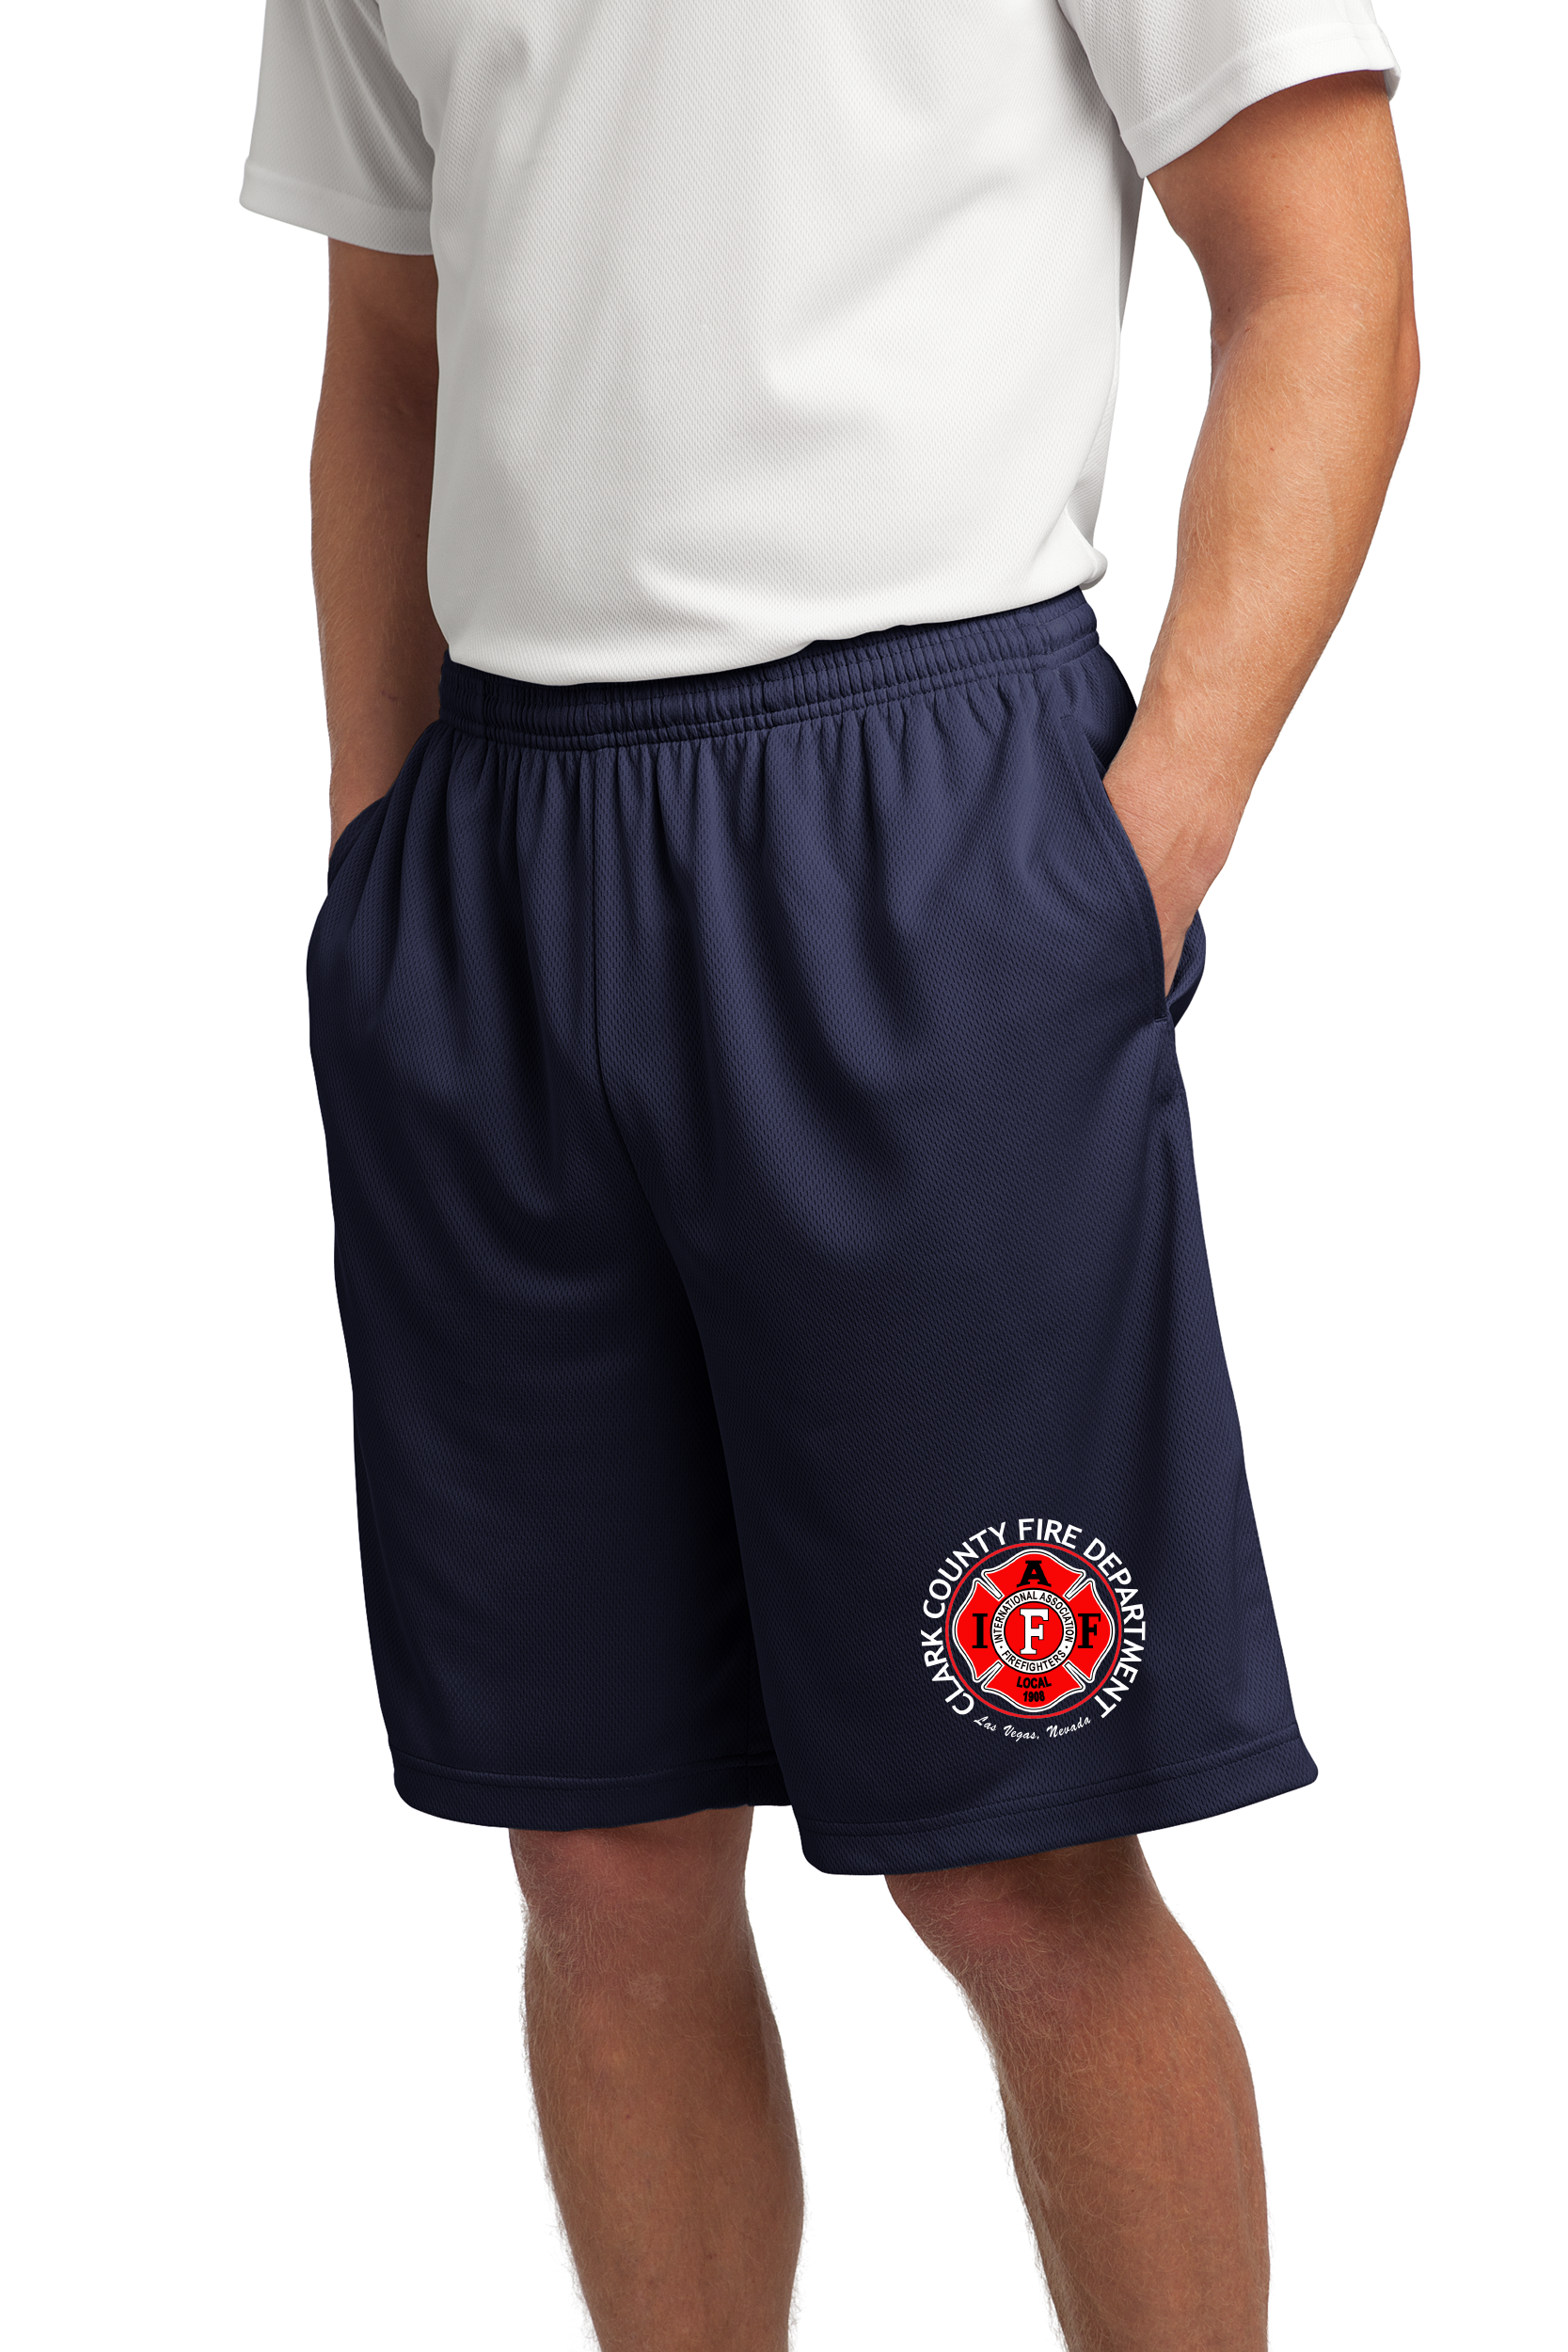 CCFD MESH Duty Workout Shorts w/ Pockets